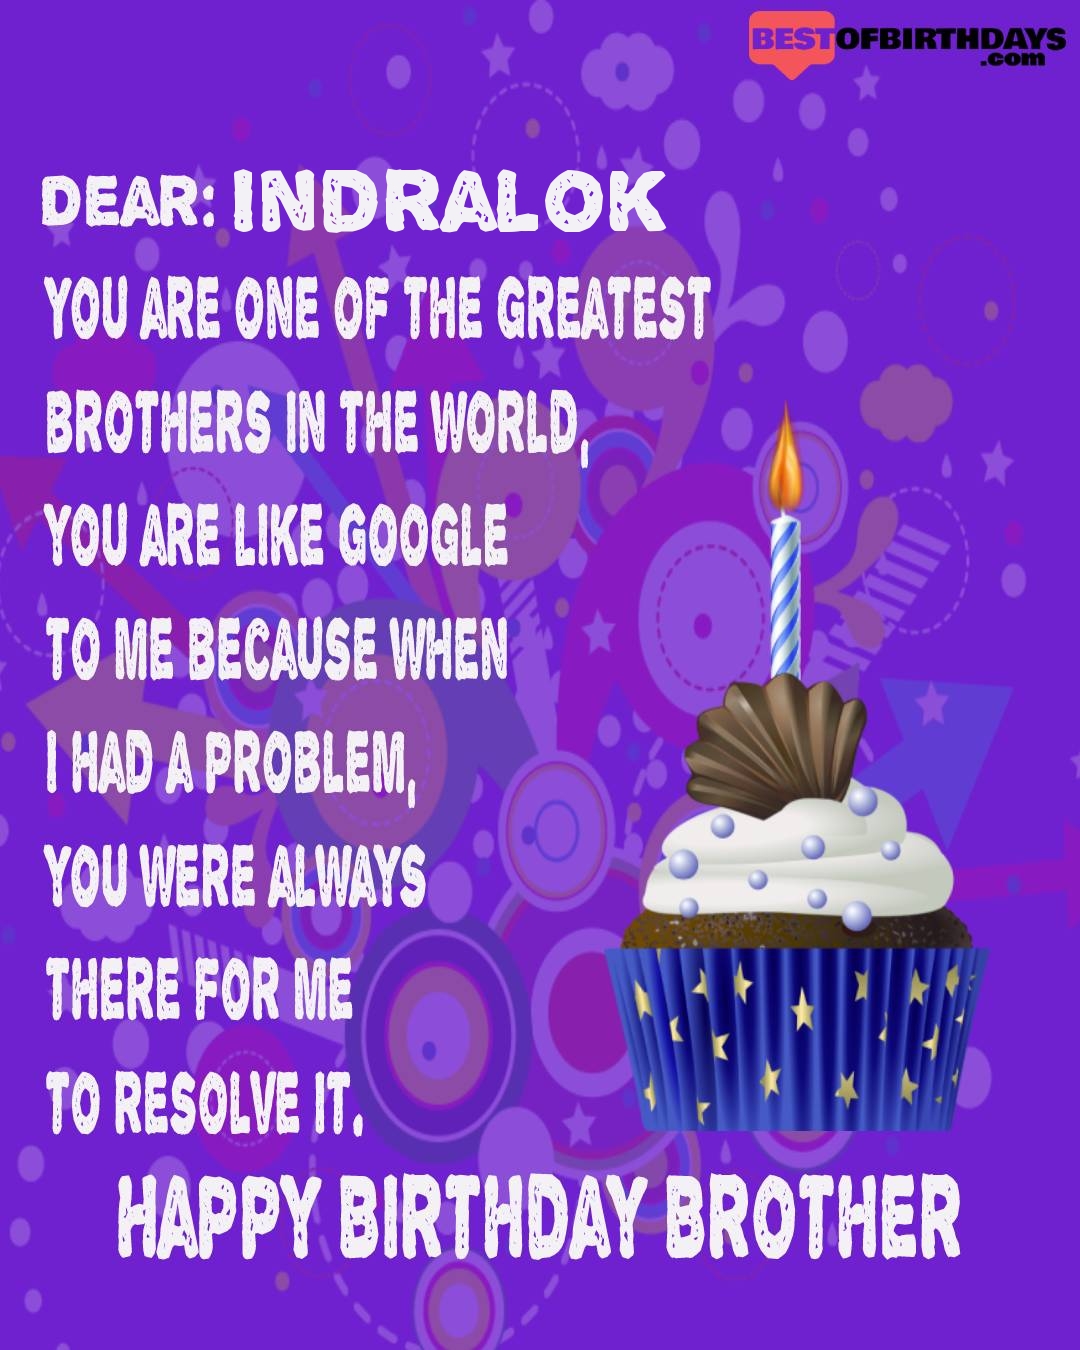 Happy birthday indralok bhai brother bro